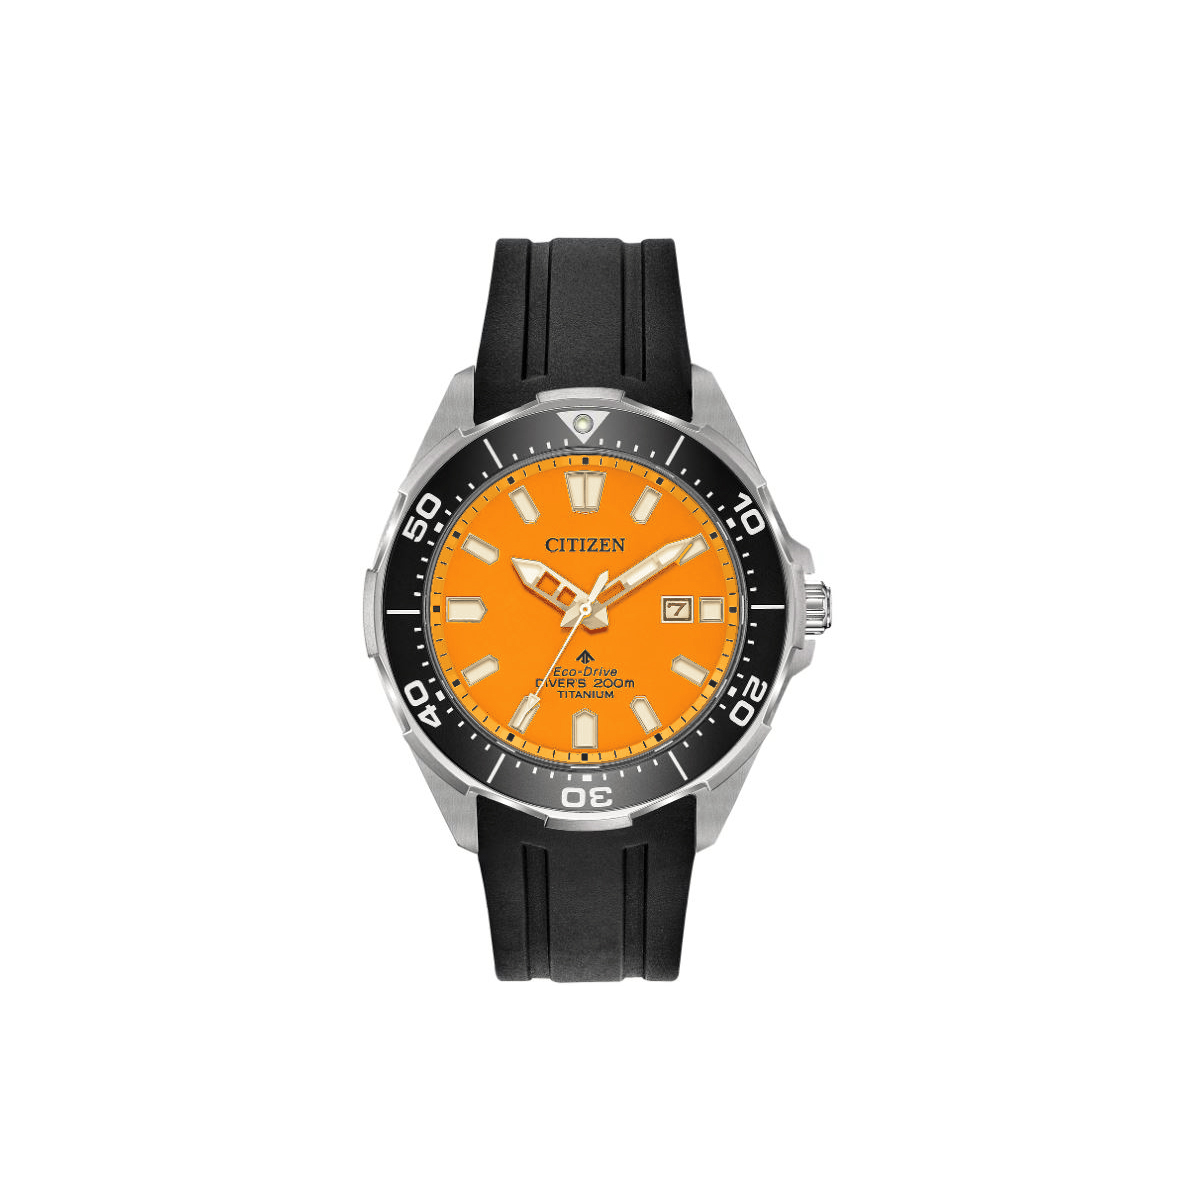 Citizen Promaster Diver Orange and Black Watch - CITZ00786